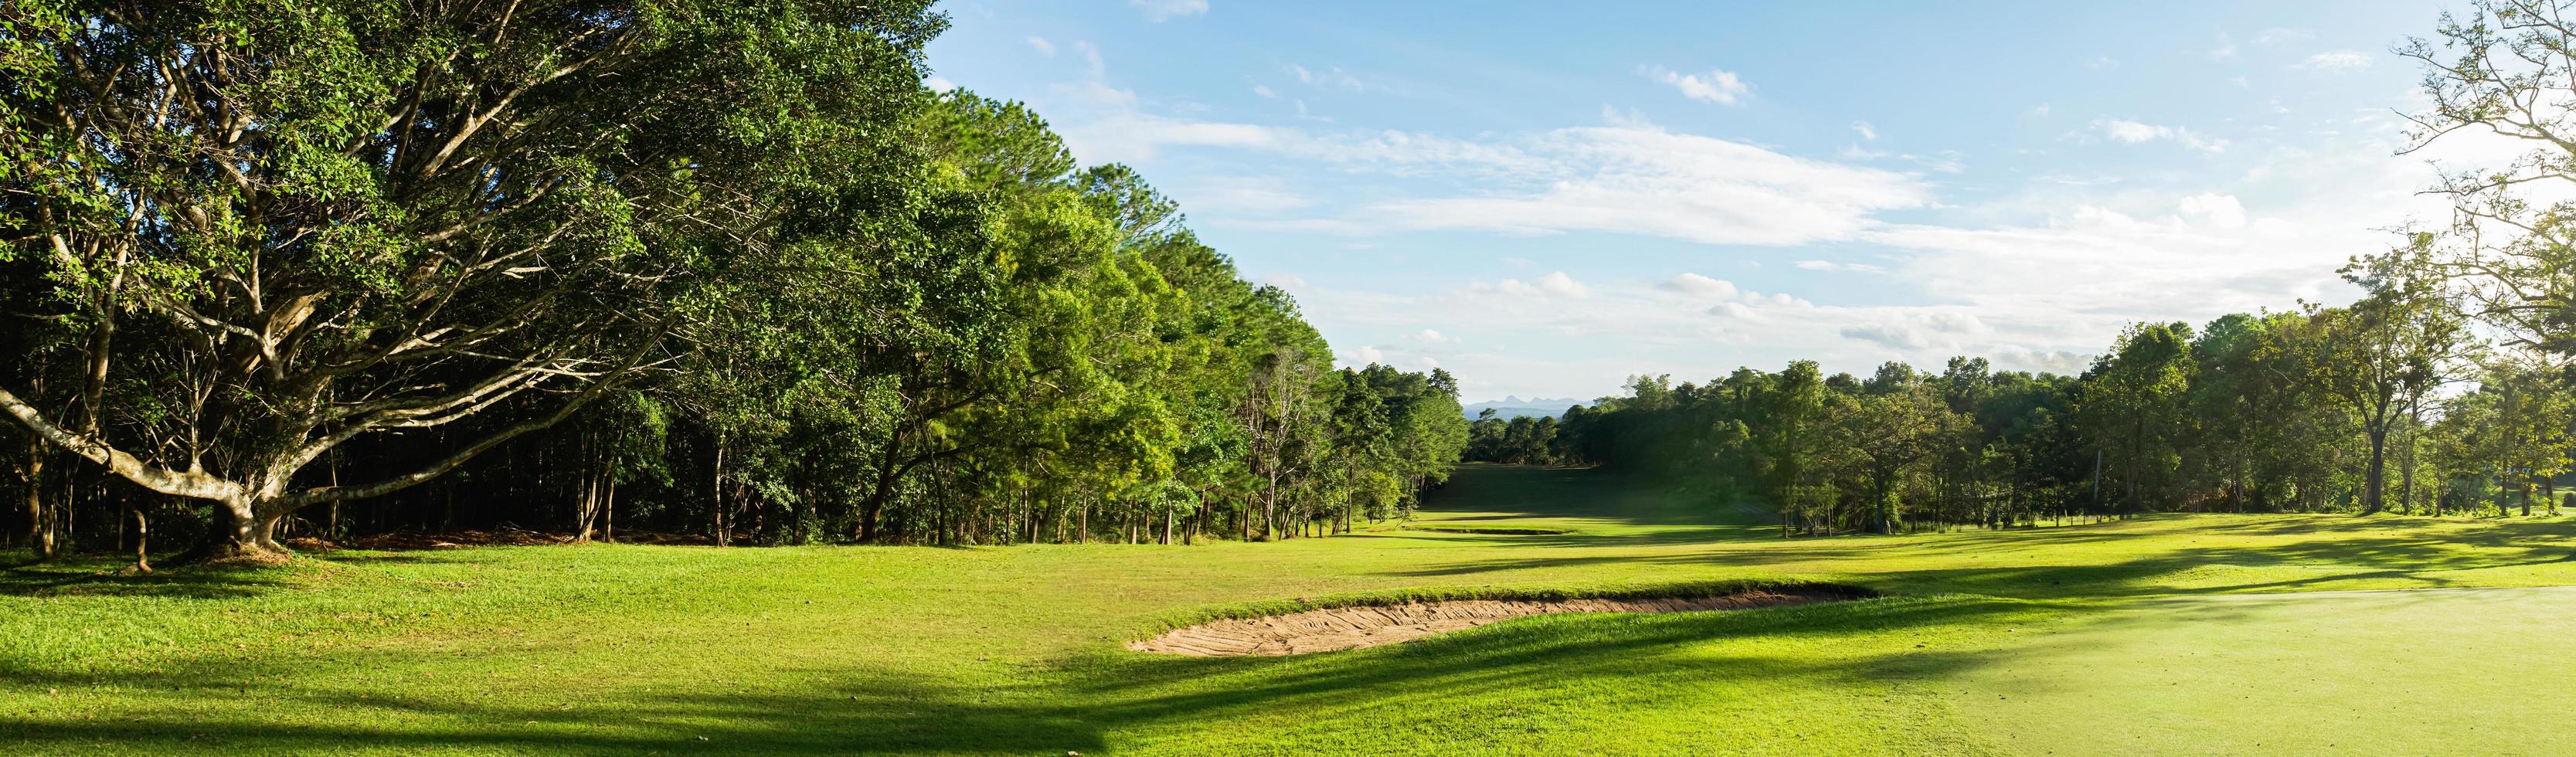 panorama landskap golf crouse med solljus foto